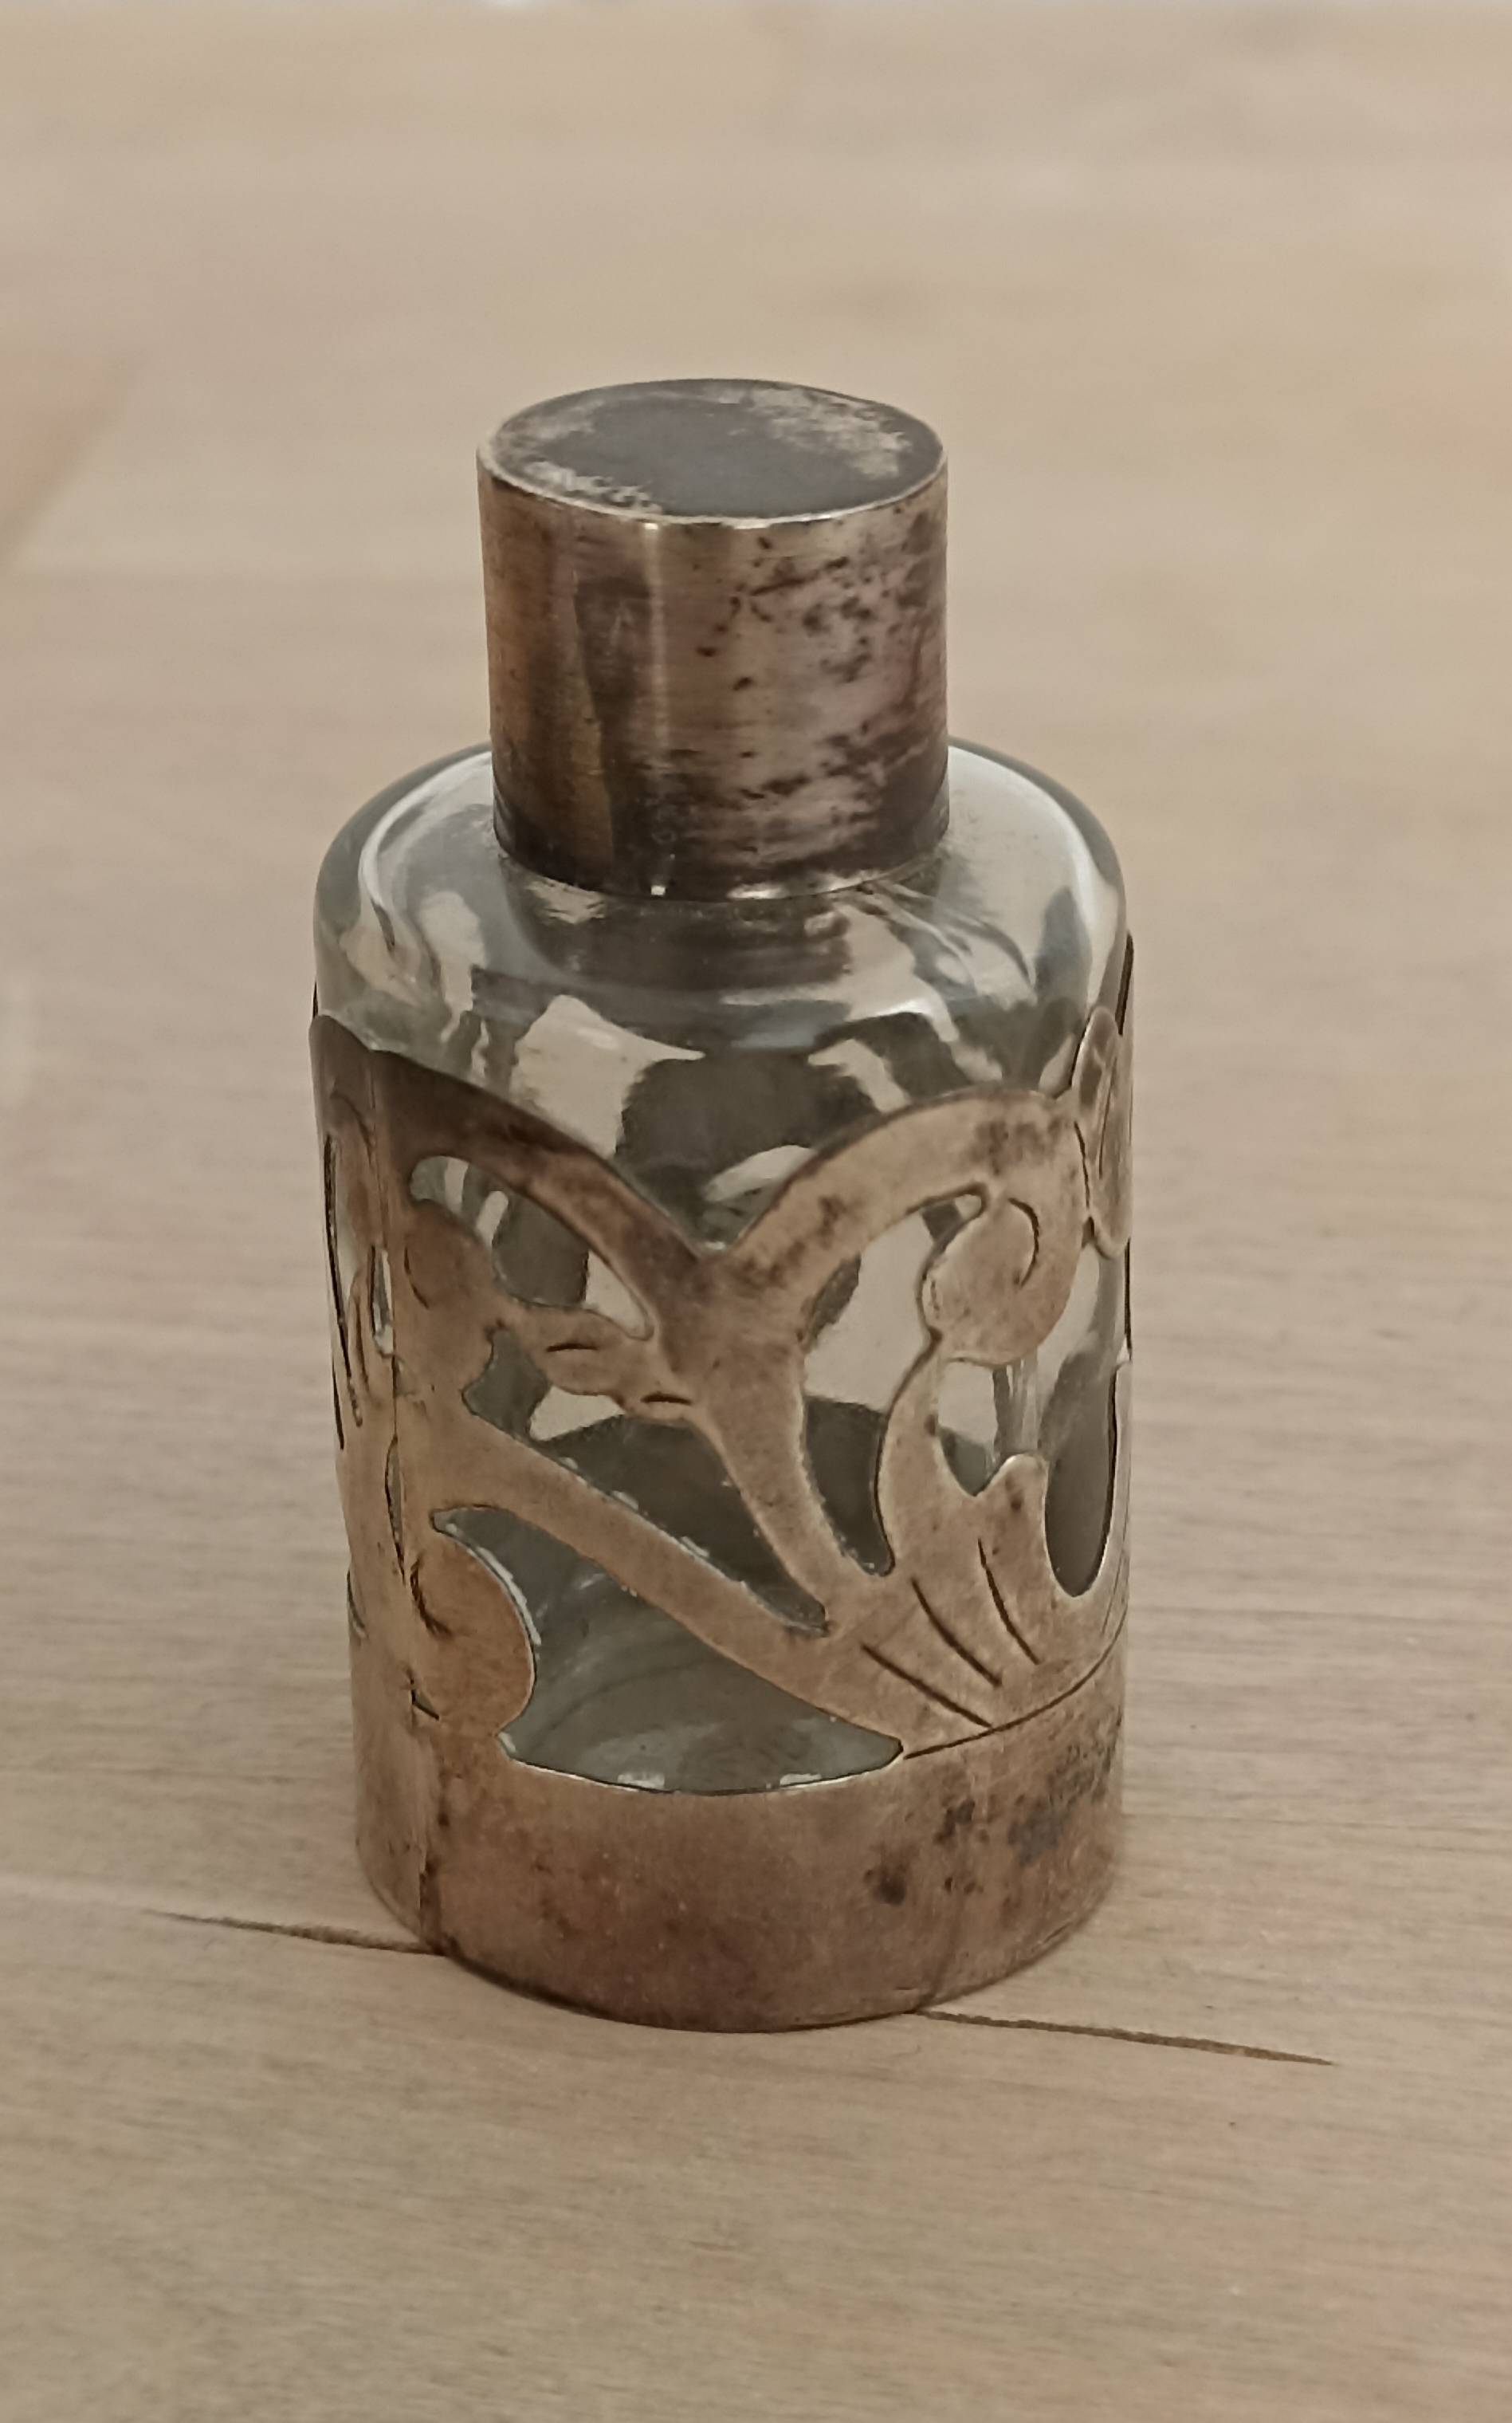 Perfumario. (5,5x3,5 cms.) Plata y Cristal. Punzón: 925 J.M.C. México. Siglo XIX